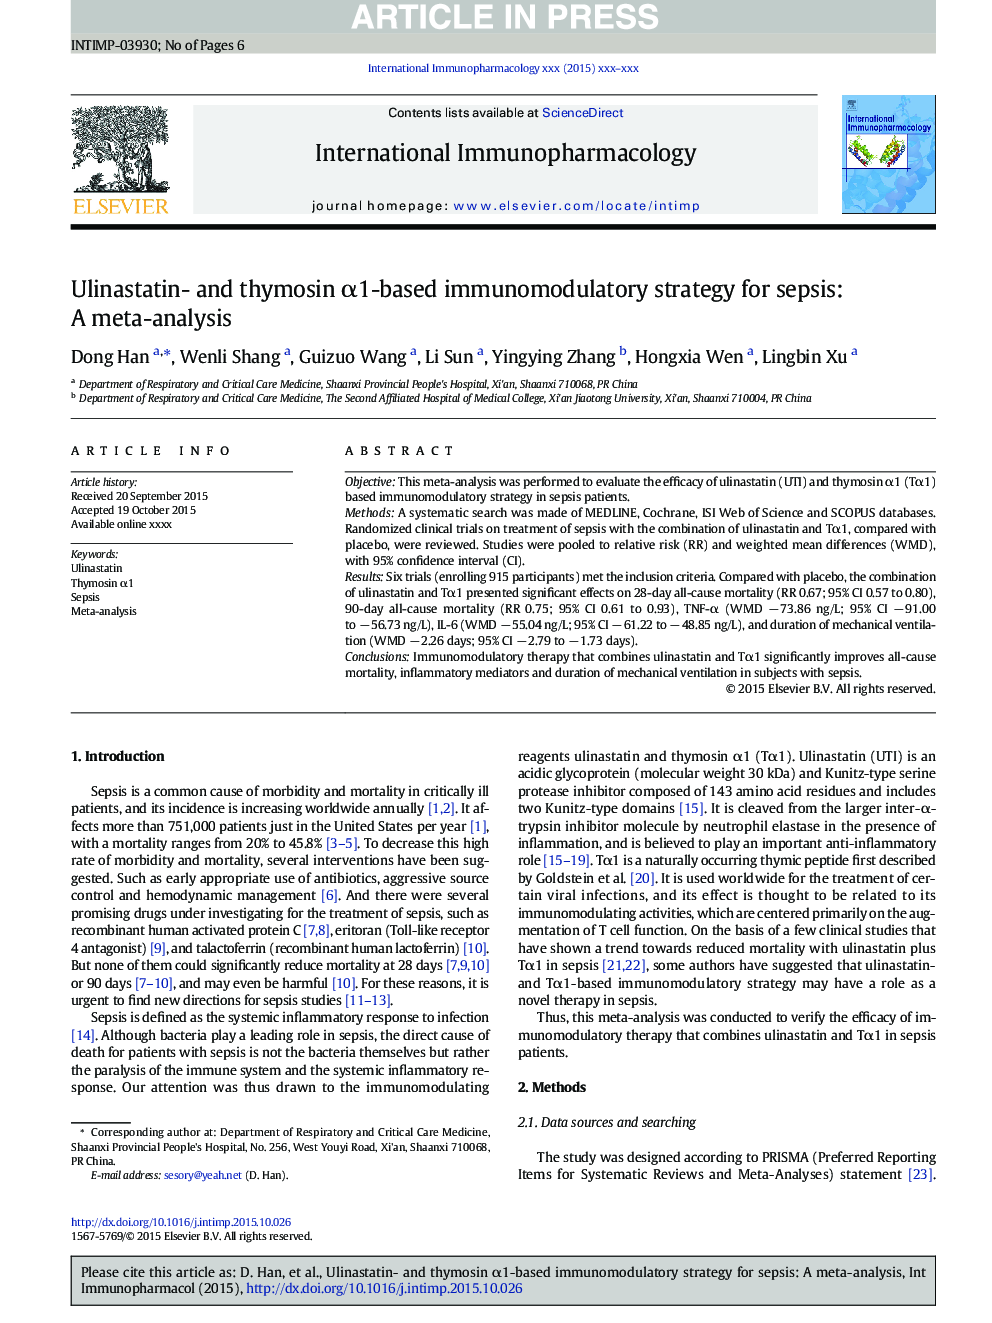 Ulinastatin- and thymosin Î±1-based immunomodulatory strategy for sepsis: A meta-analysis